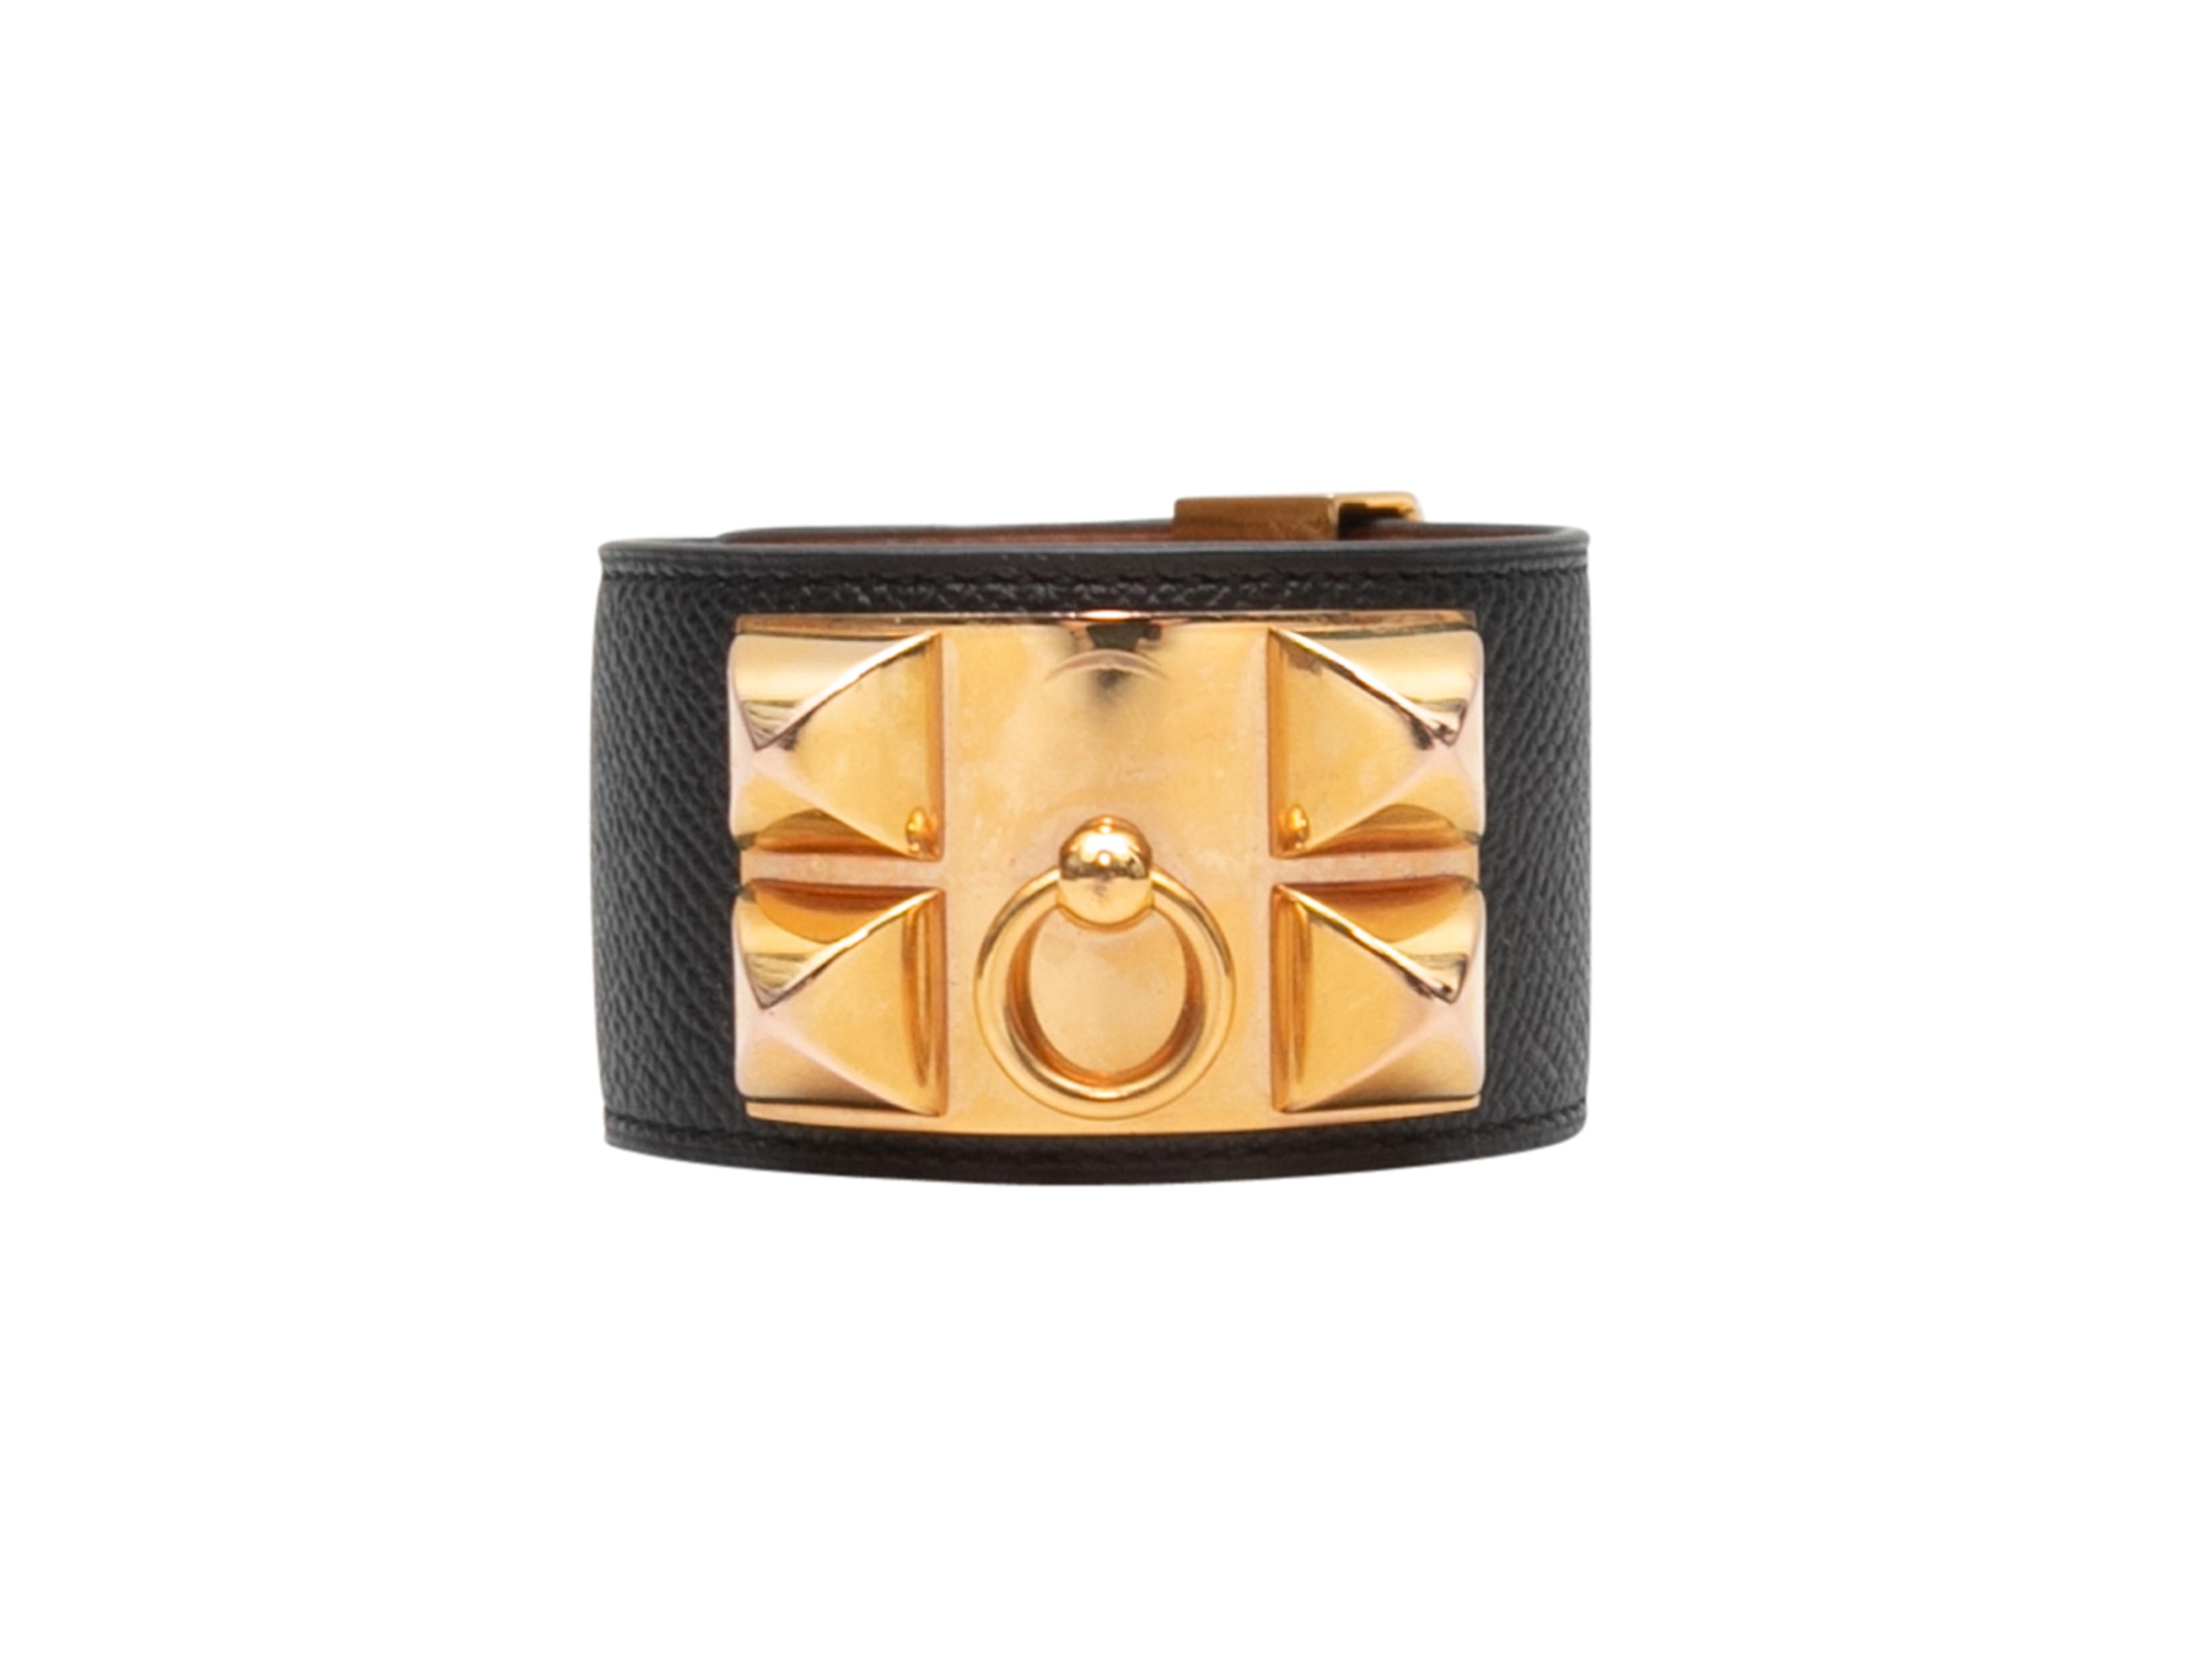 Black leather and rose gold metal Medor large cuff bracelet by Hermes. 1.5